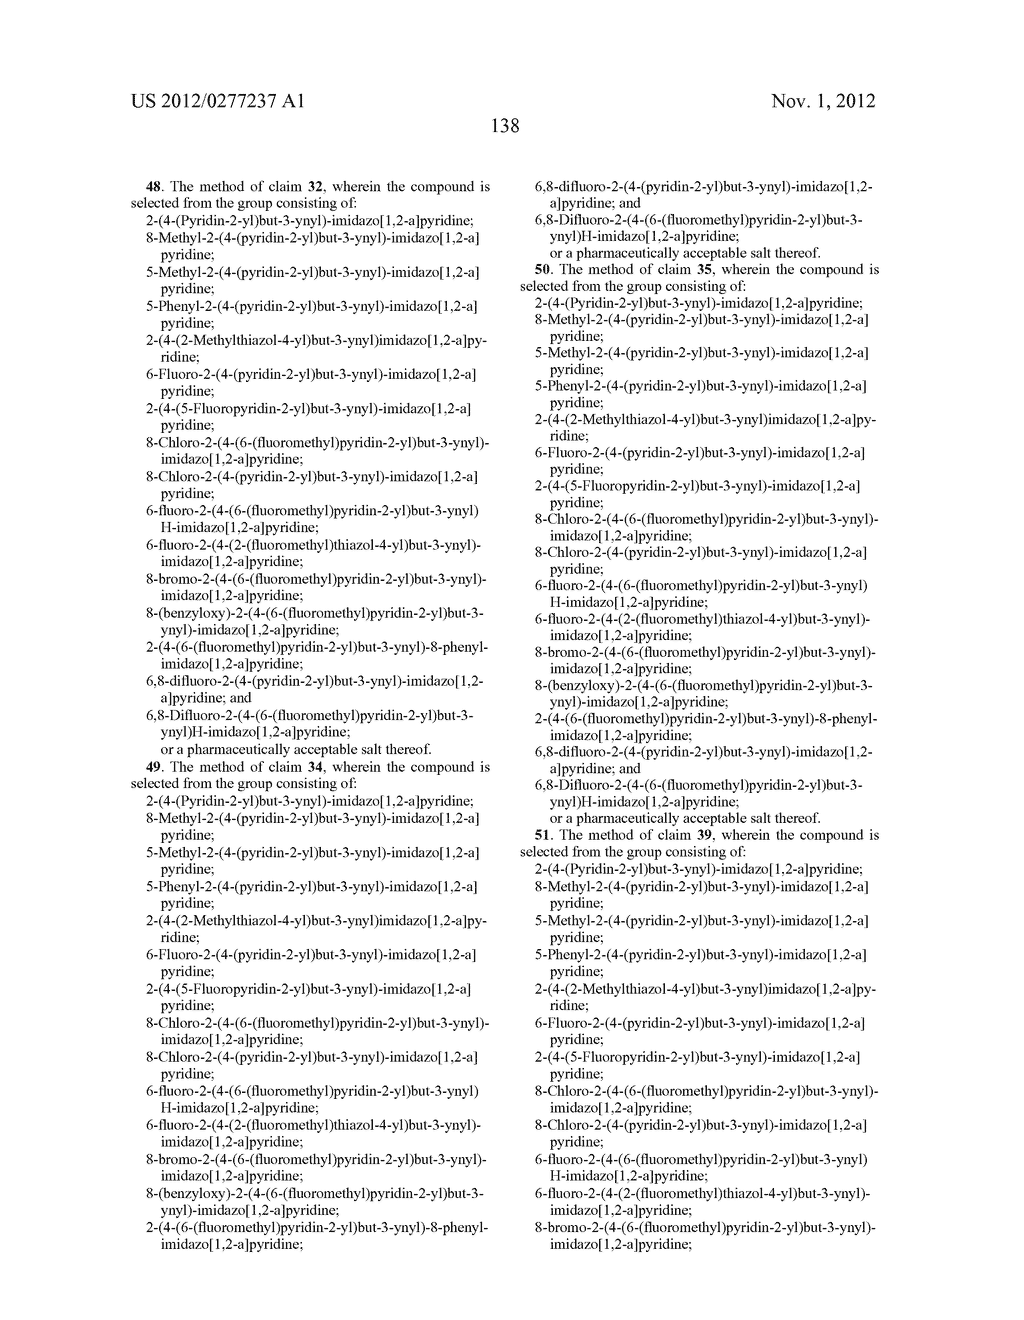 NOVEL ALKYNYL DERIVATIVES AS MODULATORS OF METABOTROPIC GLUTAMATE     RECEPTORS - diagram, schematic, and image 143